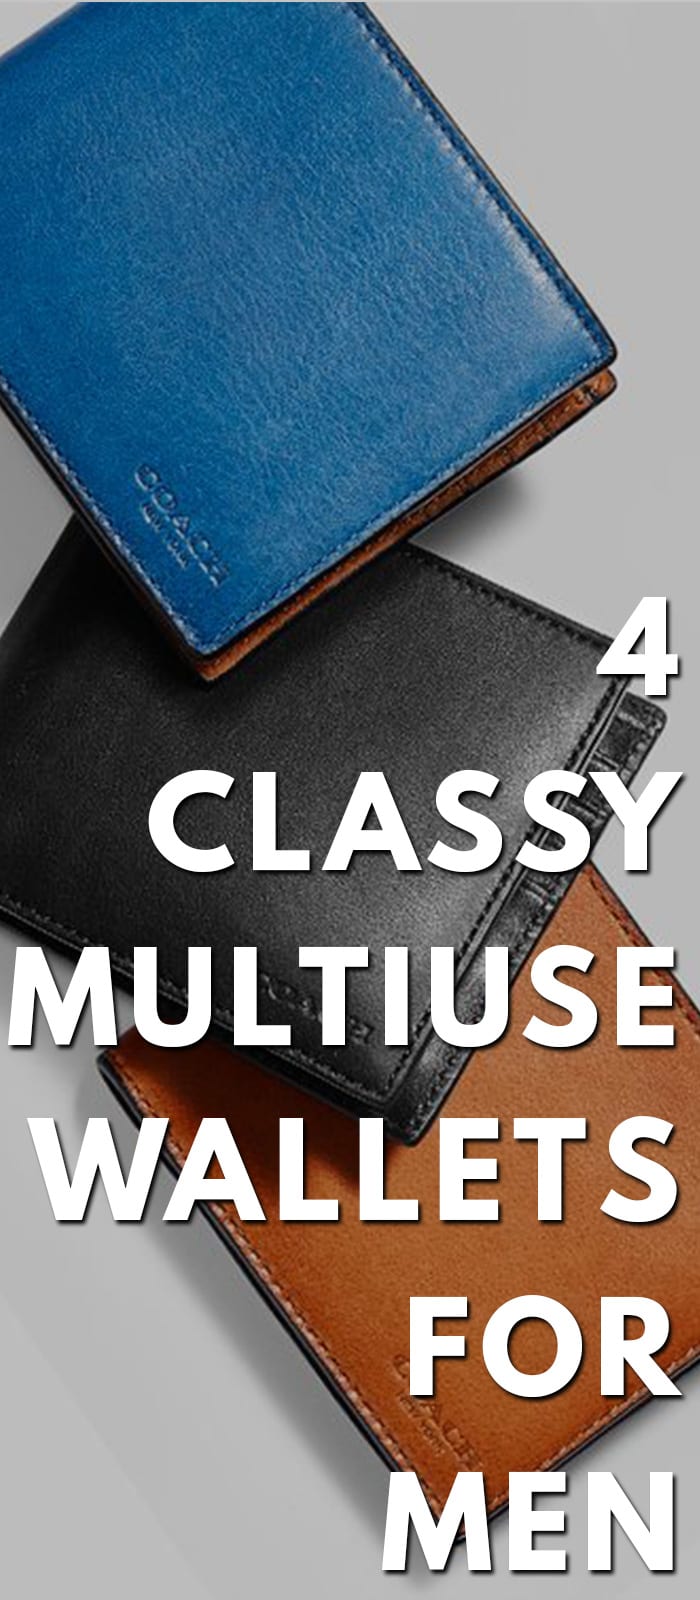 Multiuse Wallets For Men